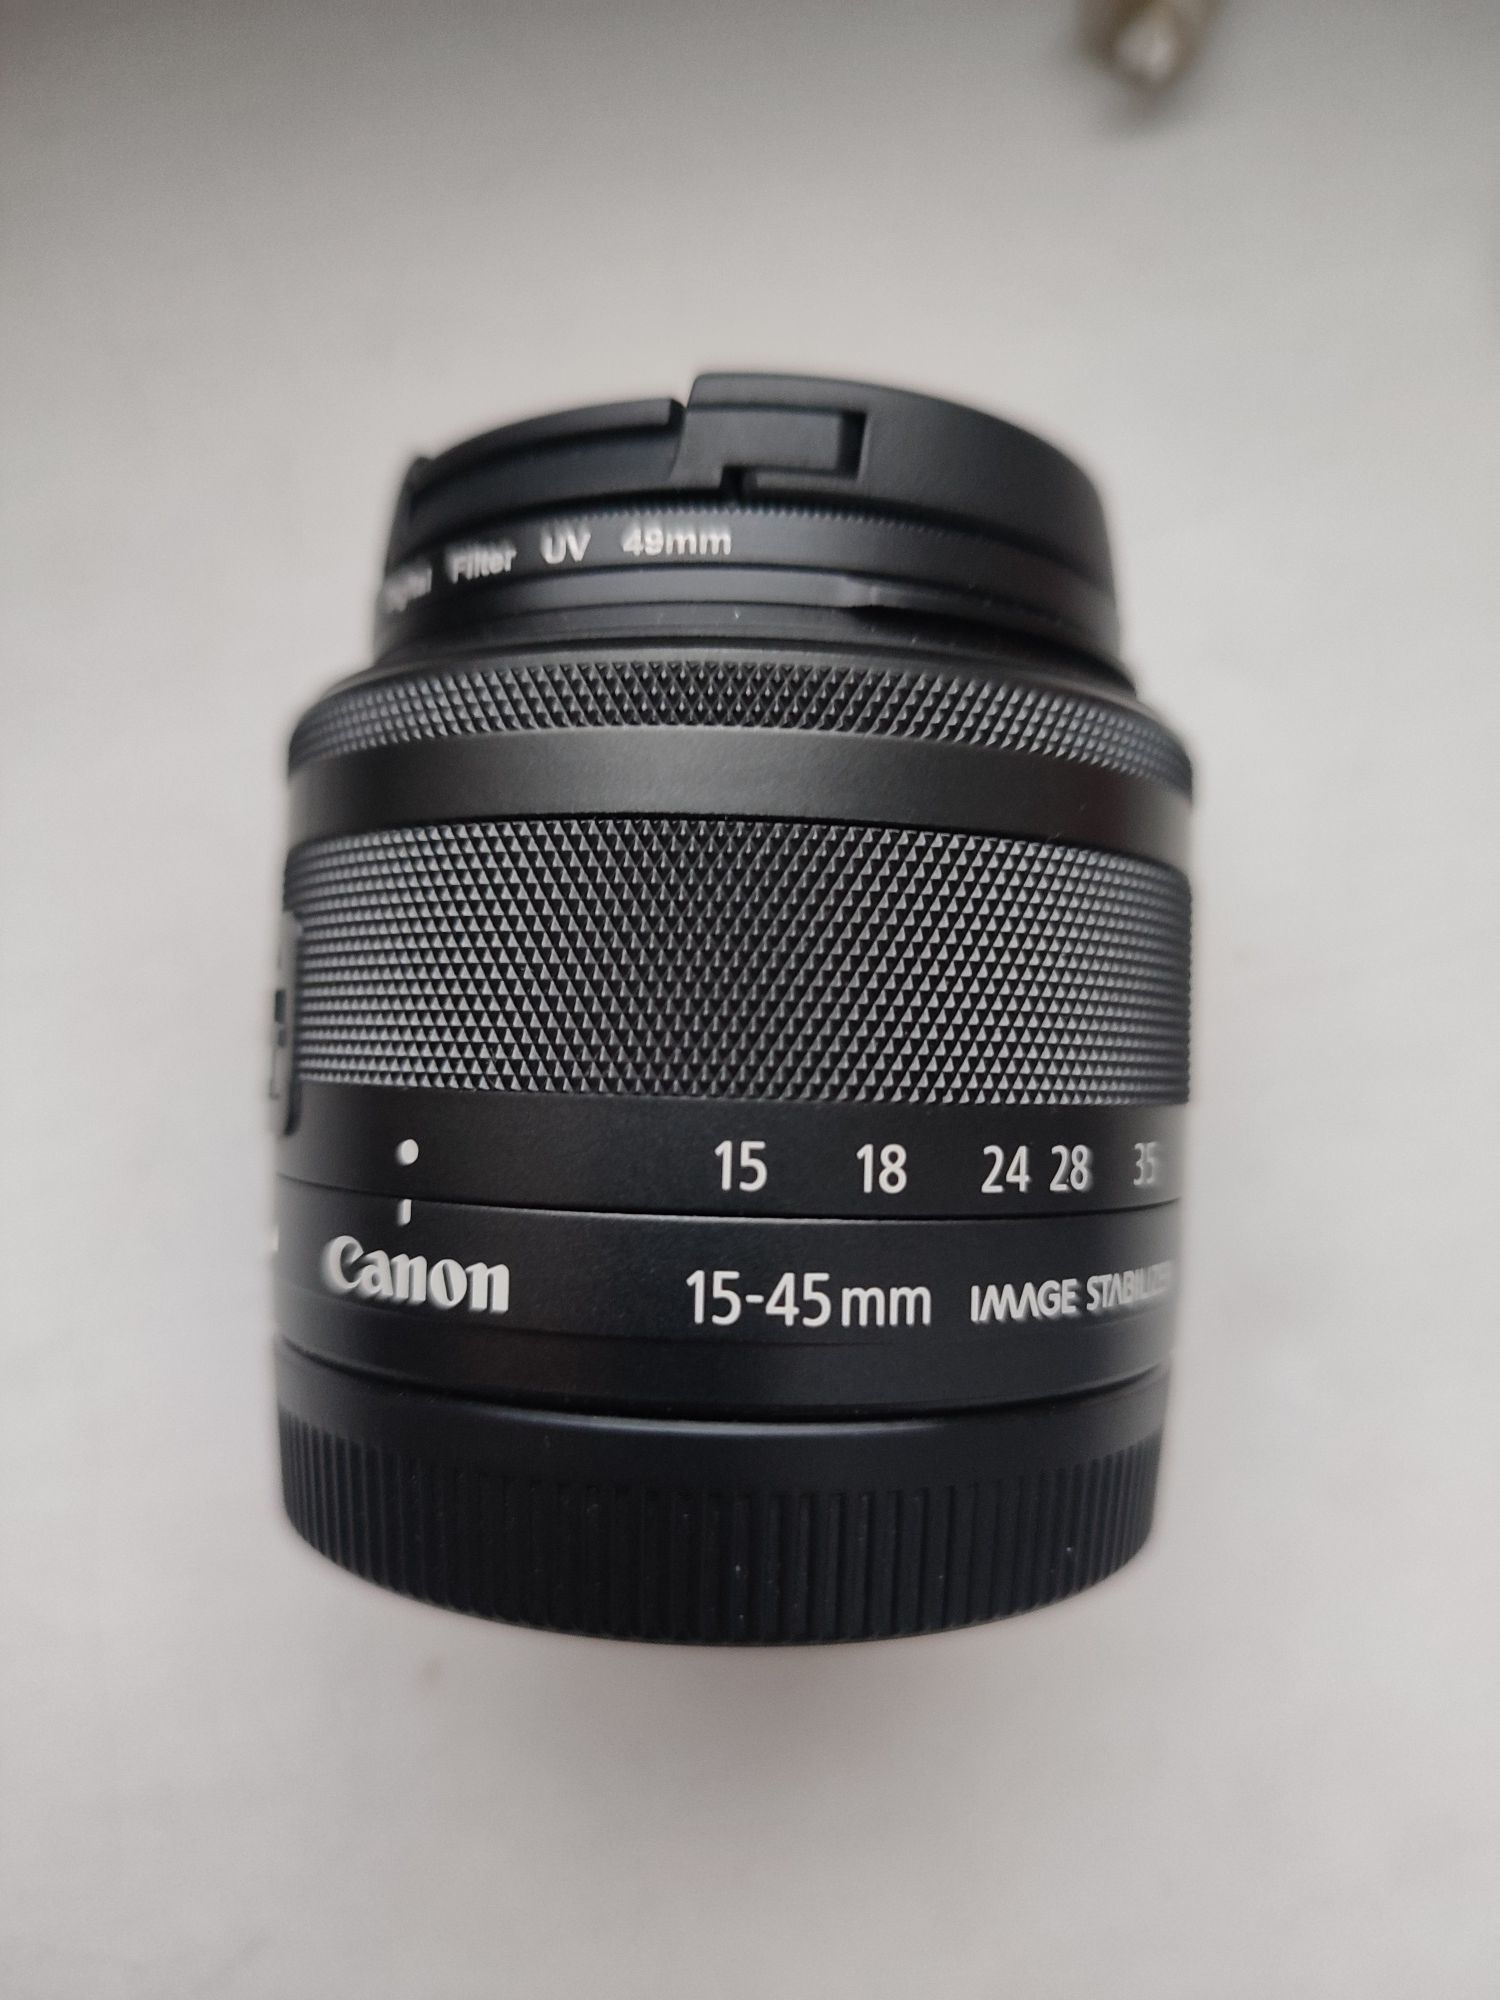 Об'єктив Canon EF-M 15-45mm f/3.5-6.3 IS STM